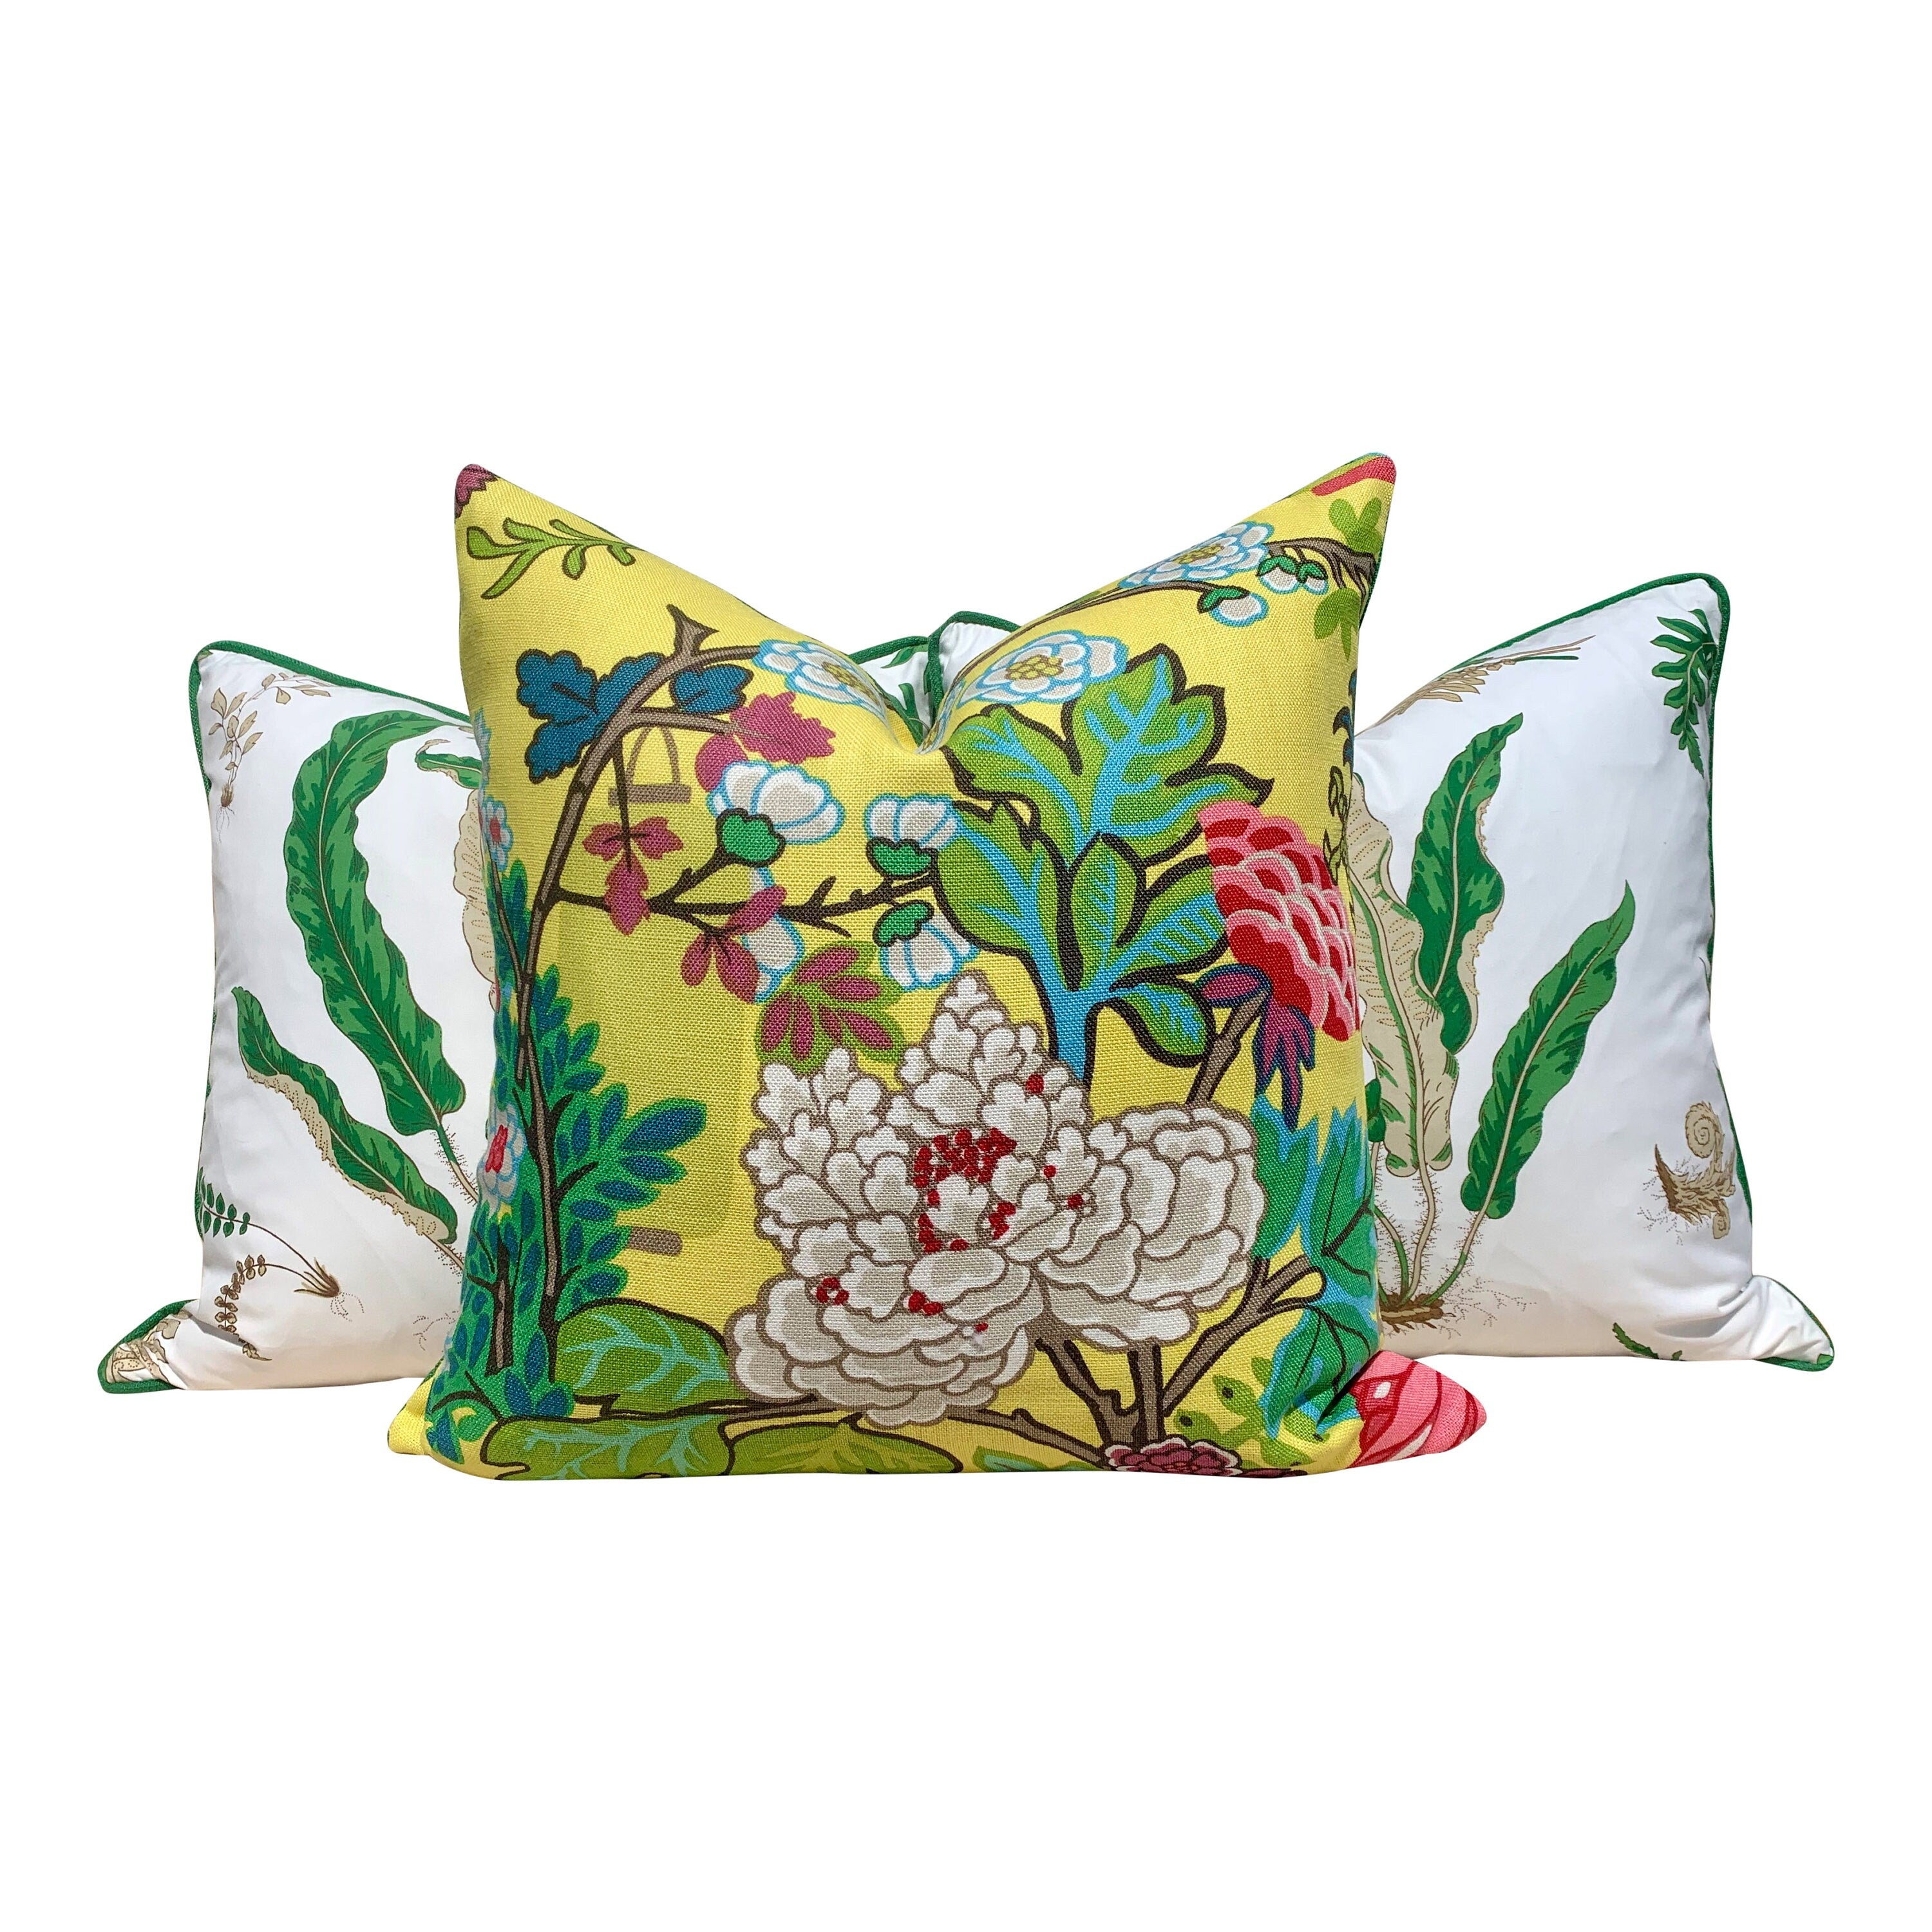 Schumacher Chang Mai Dragon Pillow in Yellow. Decorative Floral Asian Lumbar Linen Pillow in Yellow.